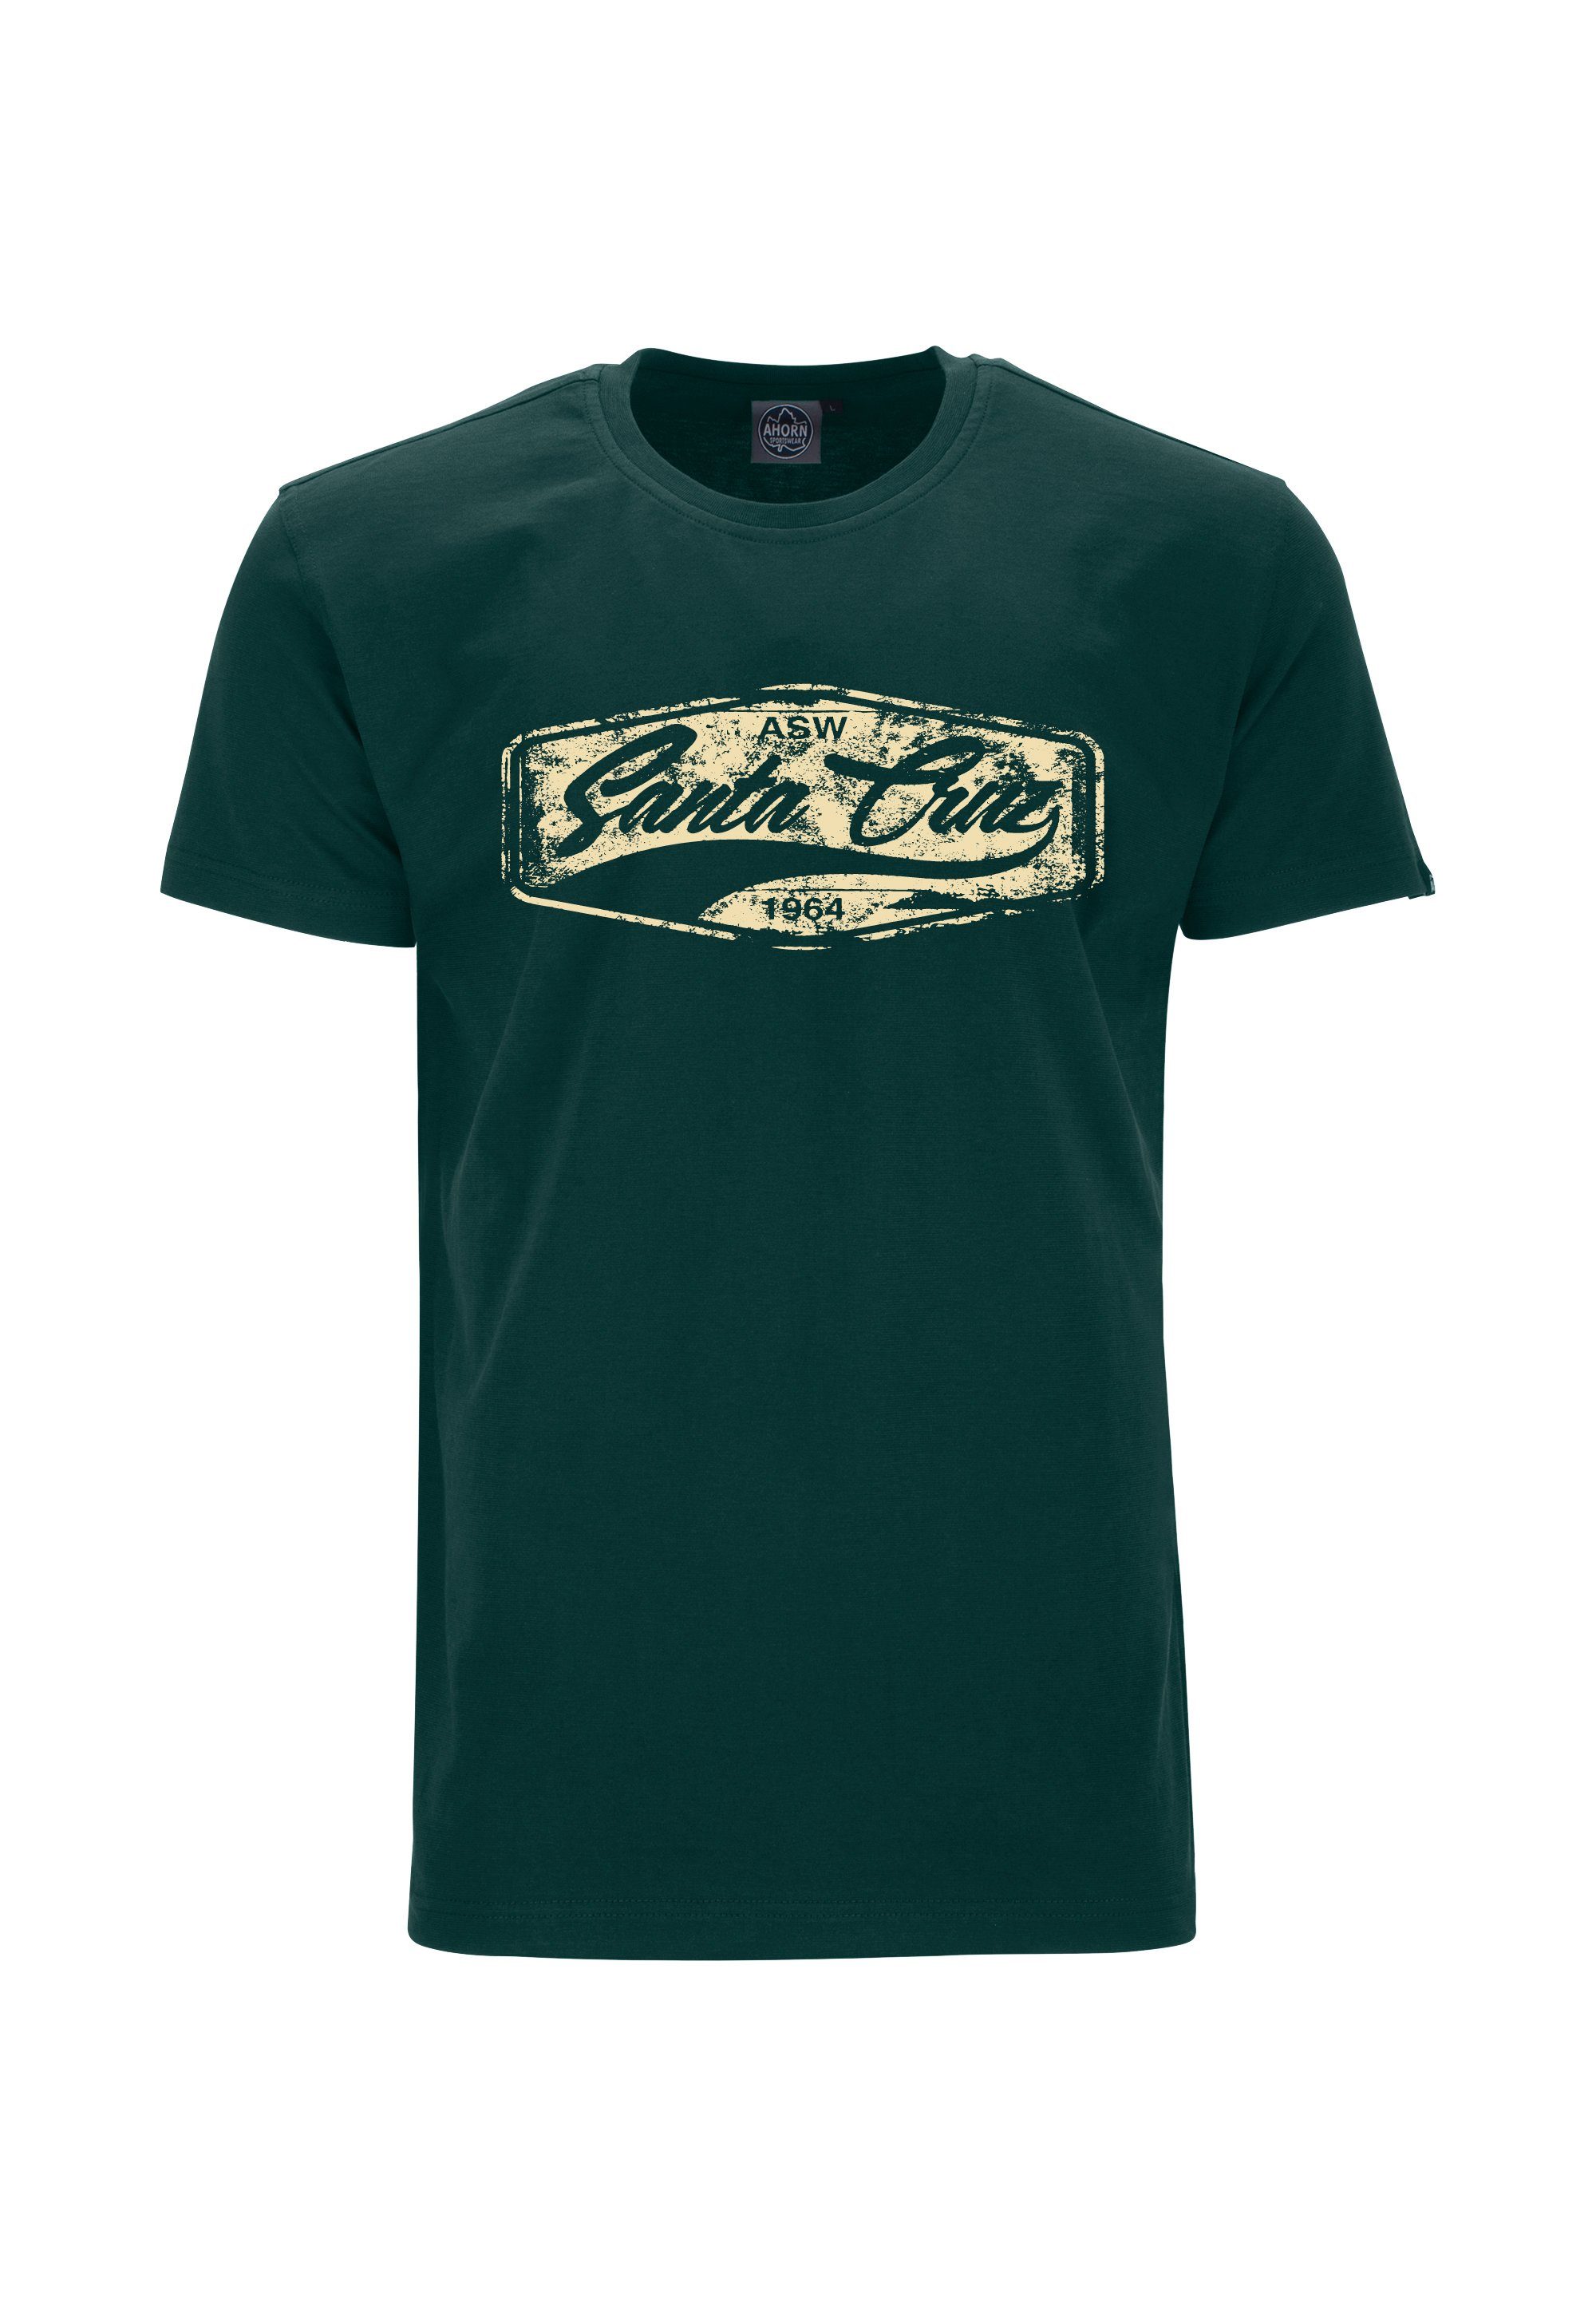 AHORN SPORTSWEAR T-Shirt SANTA CRU mit modischem Frontprint dunkelgrün